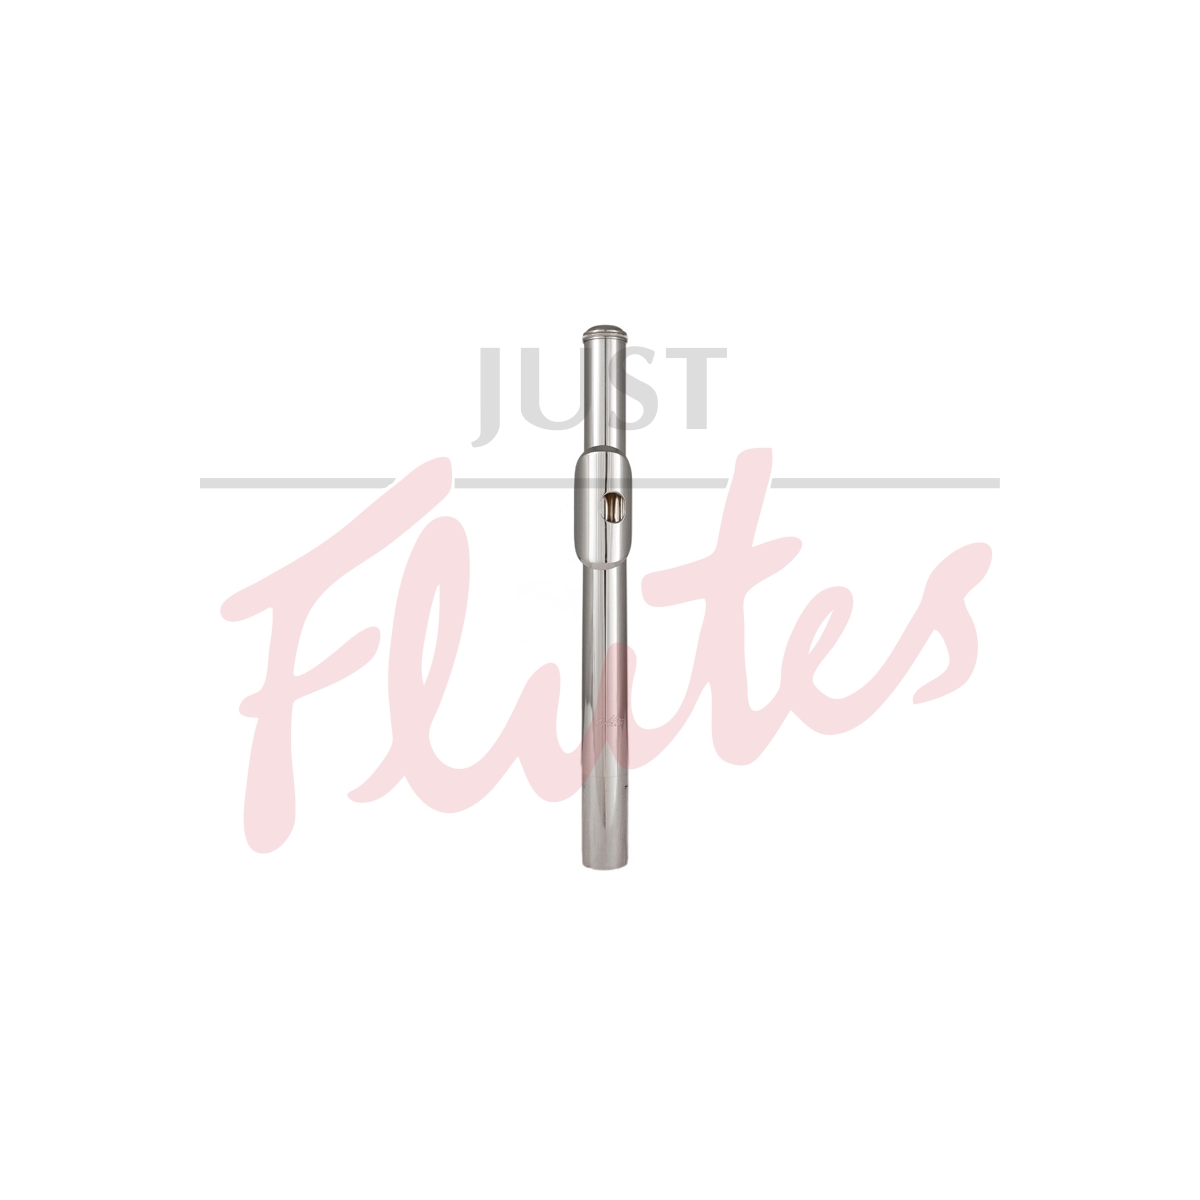 Altus .997 High Purity Platinum-Plated Professional Flute Headjoint